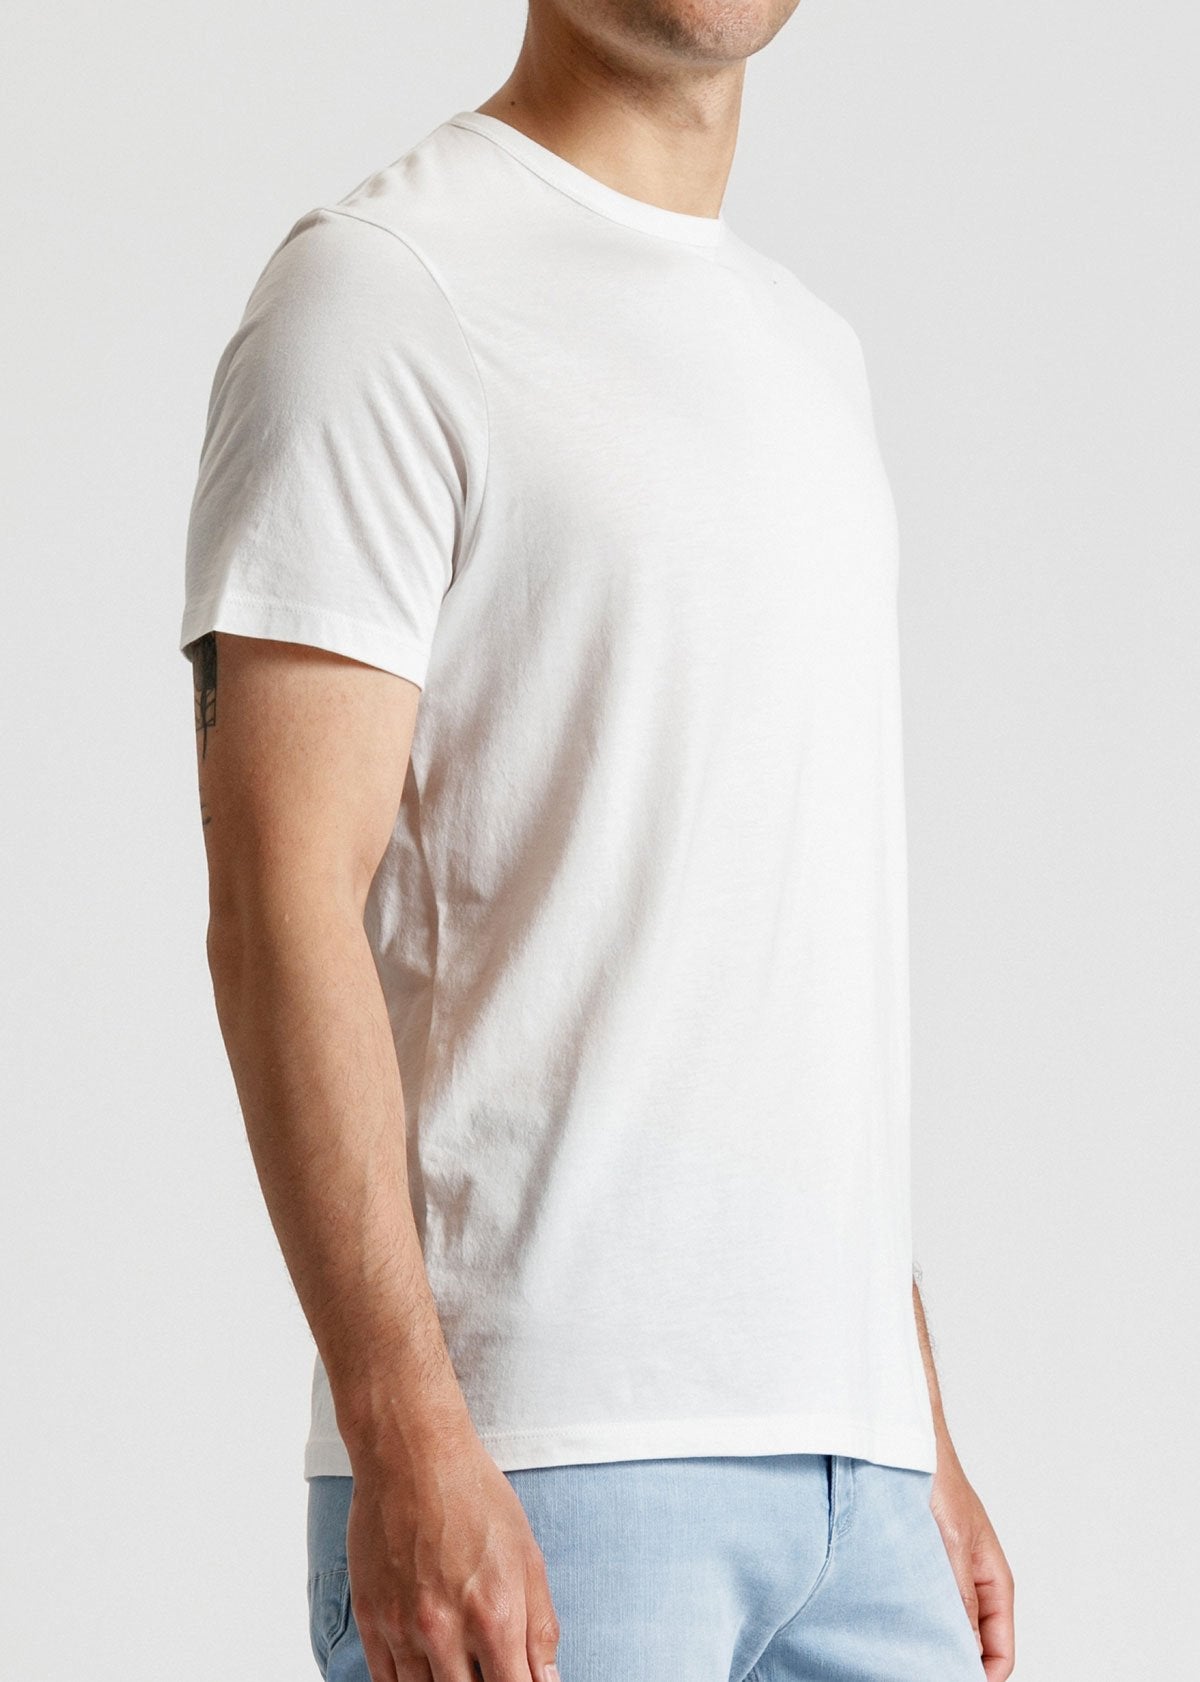 Mens soft lightweight white t-shirt side